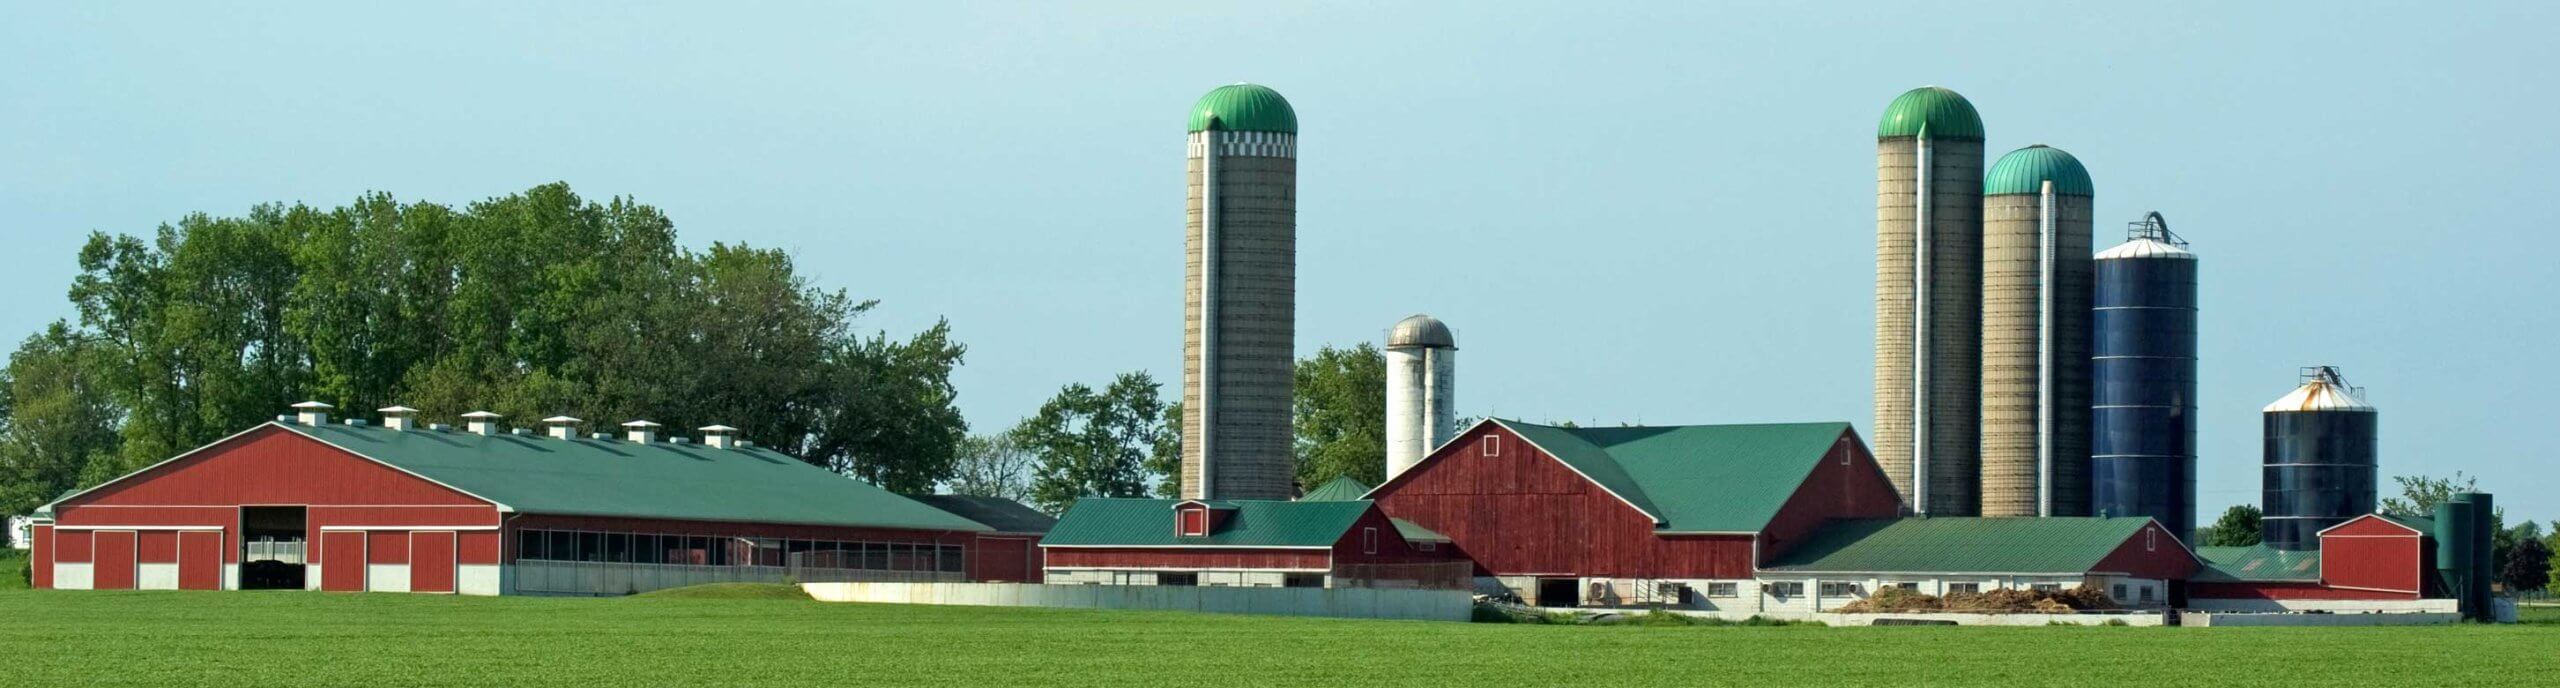 Farm Image